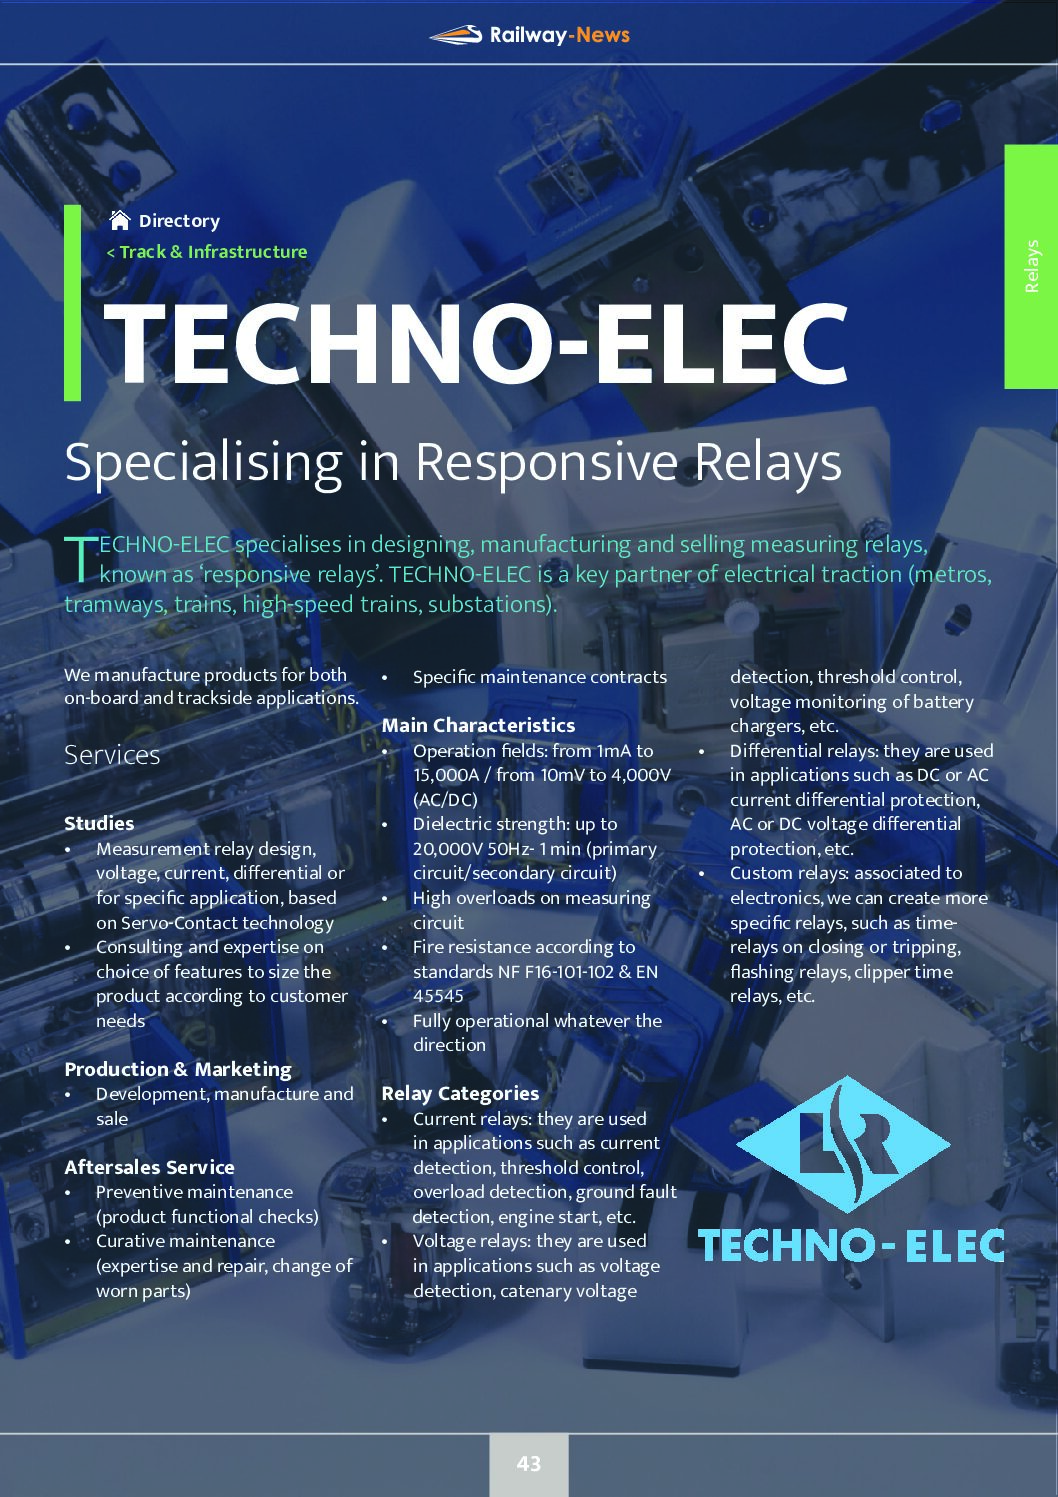 TECHNO-ELEC – Specialising in Responsive Relays